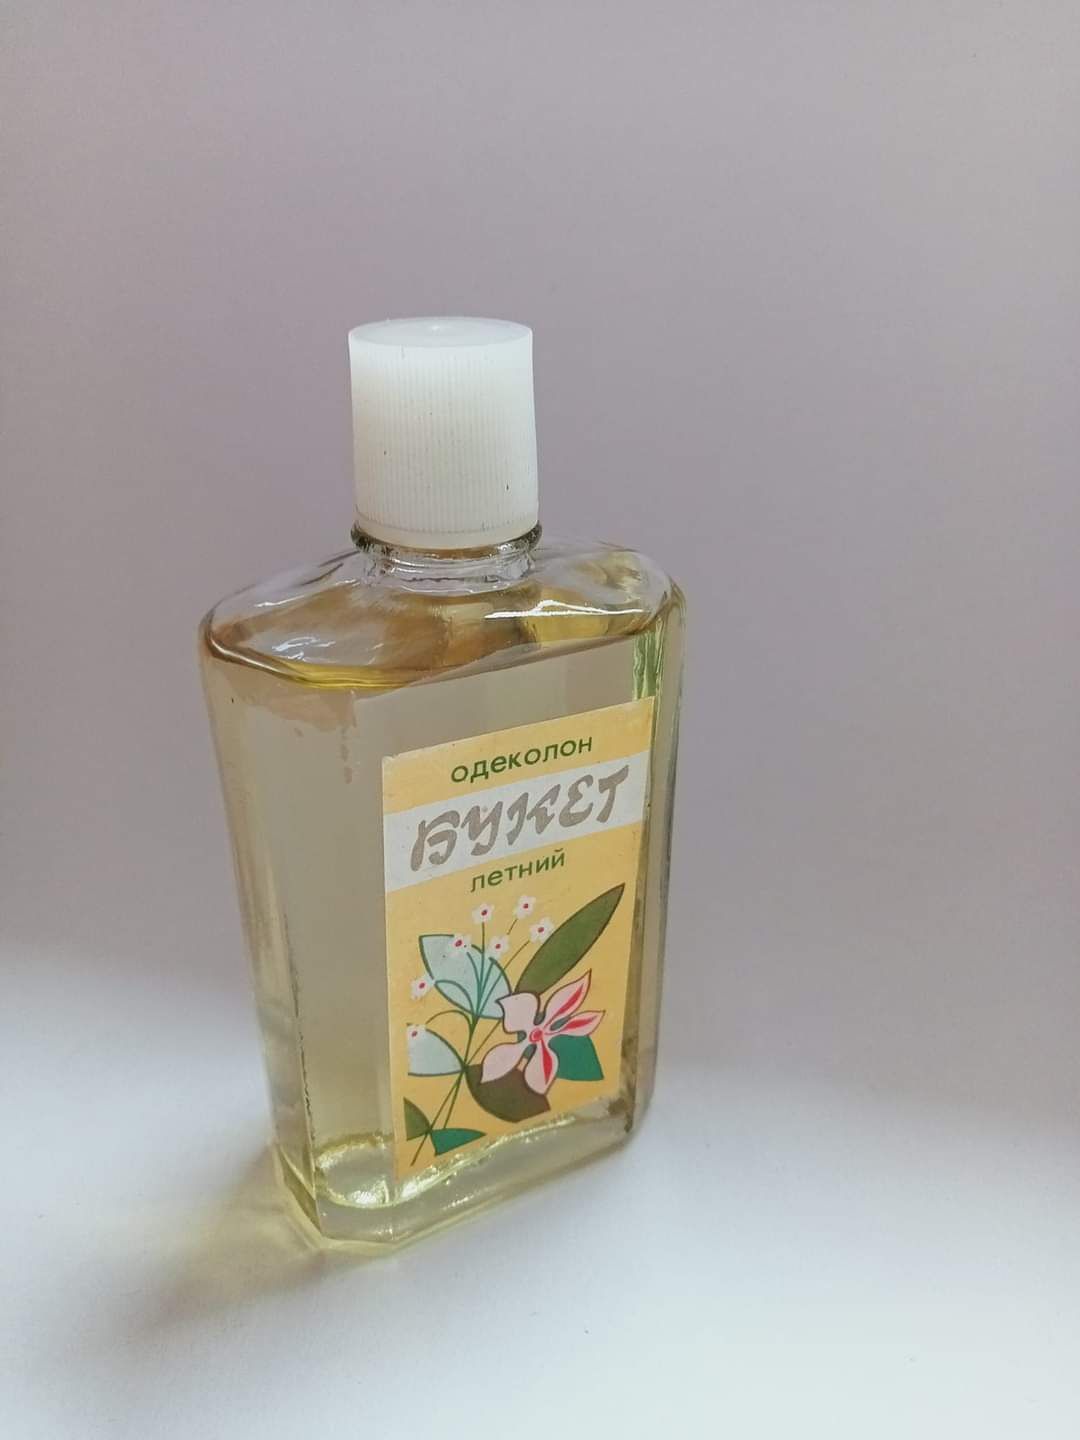 Aftershave / parfum vechi de colecție, perioada comunista RSR